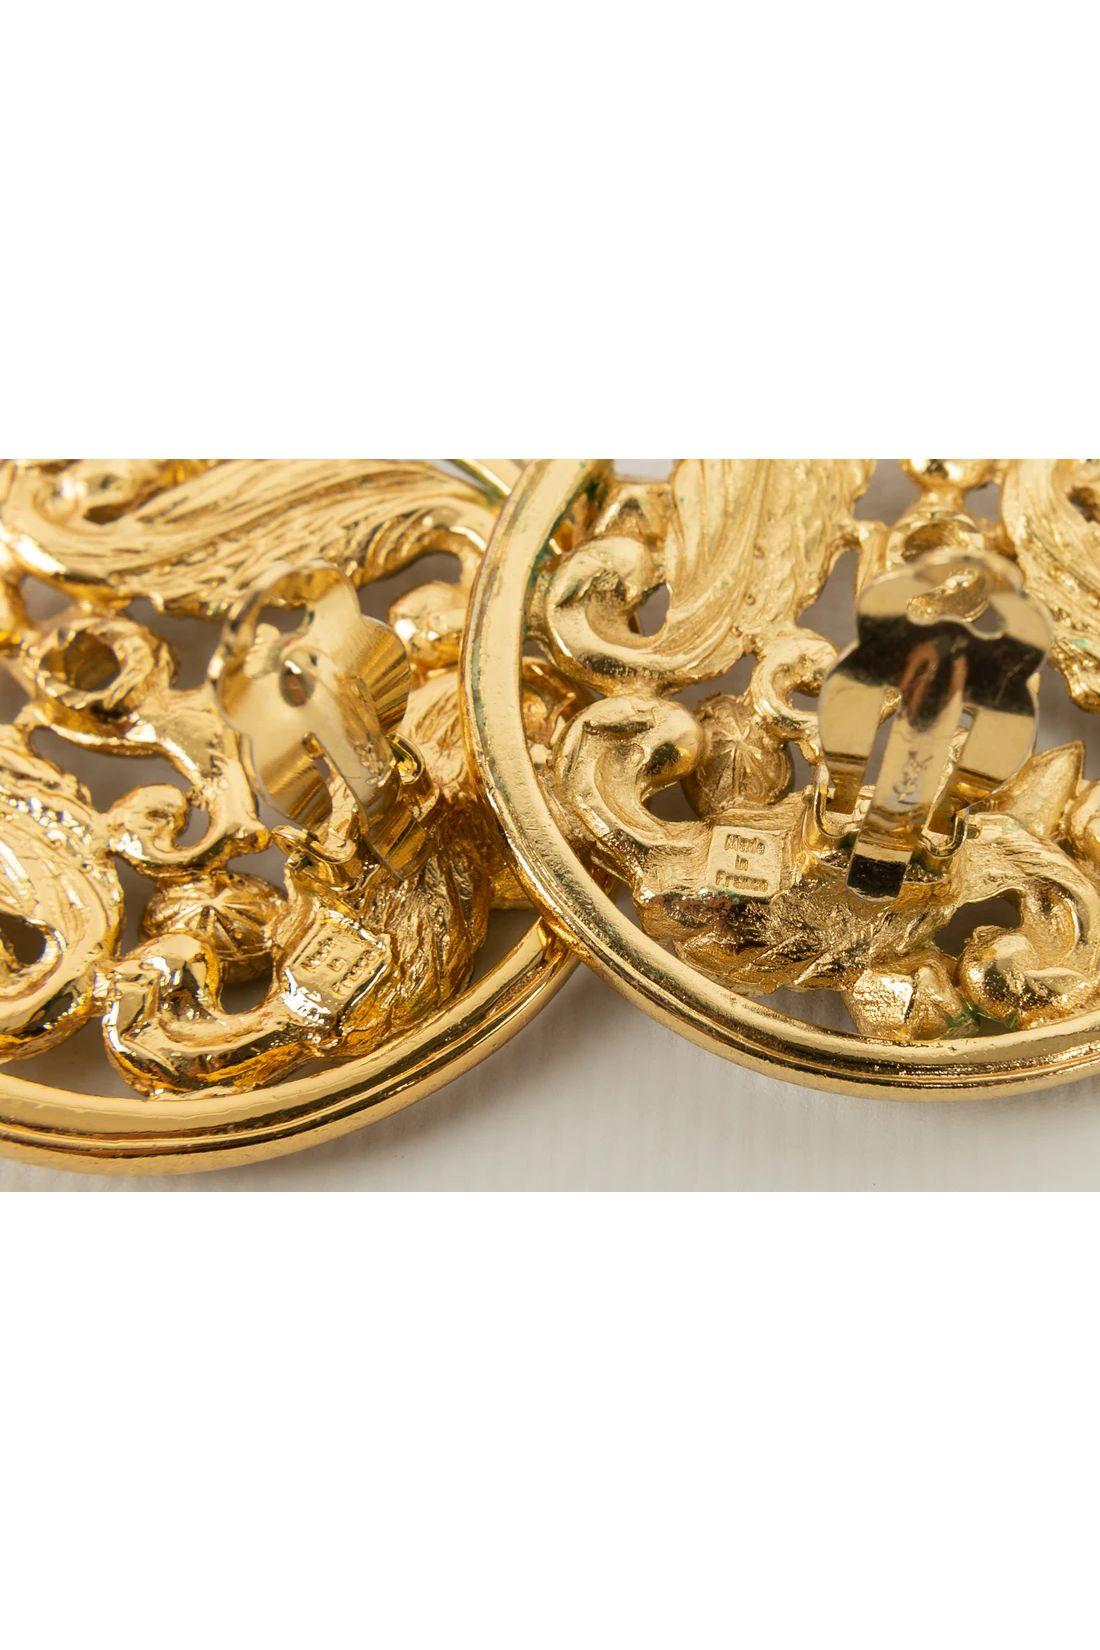 Yves Saint Laurent Gold Metal and Rhinestone Earrings For Sale 1